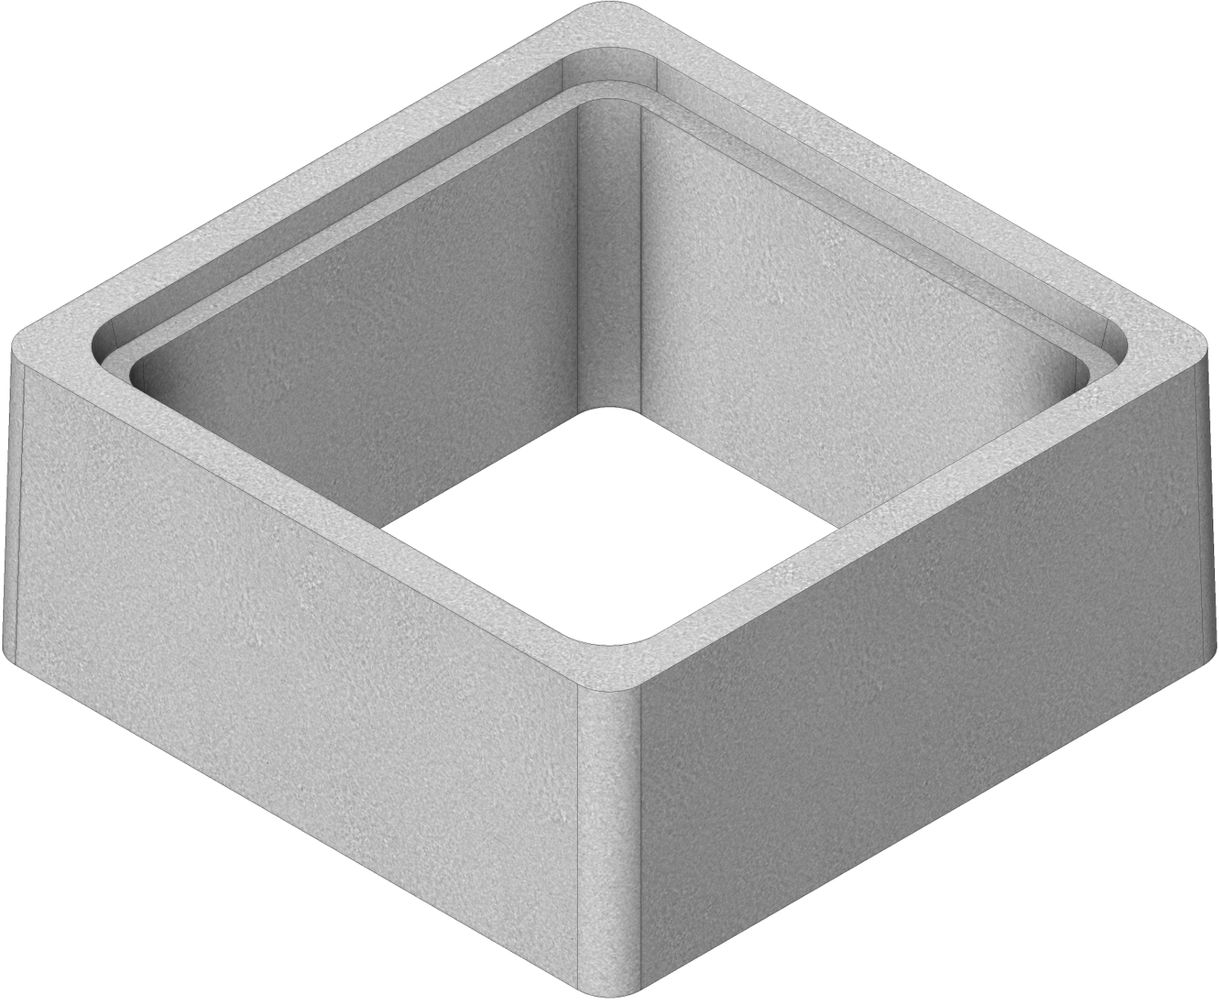 rehausse-beton-boite-pluviale-rp50-500x500-h200-thebault-0